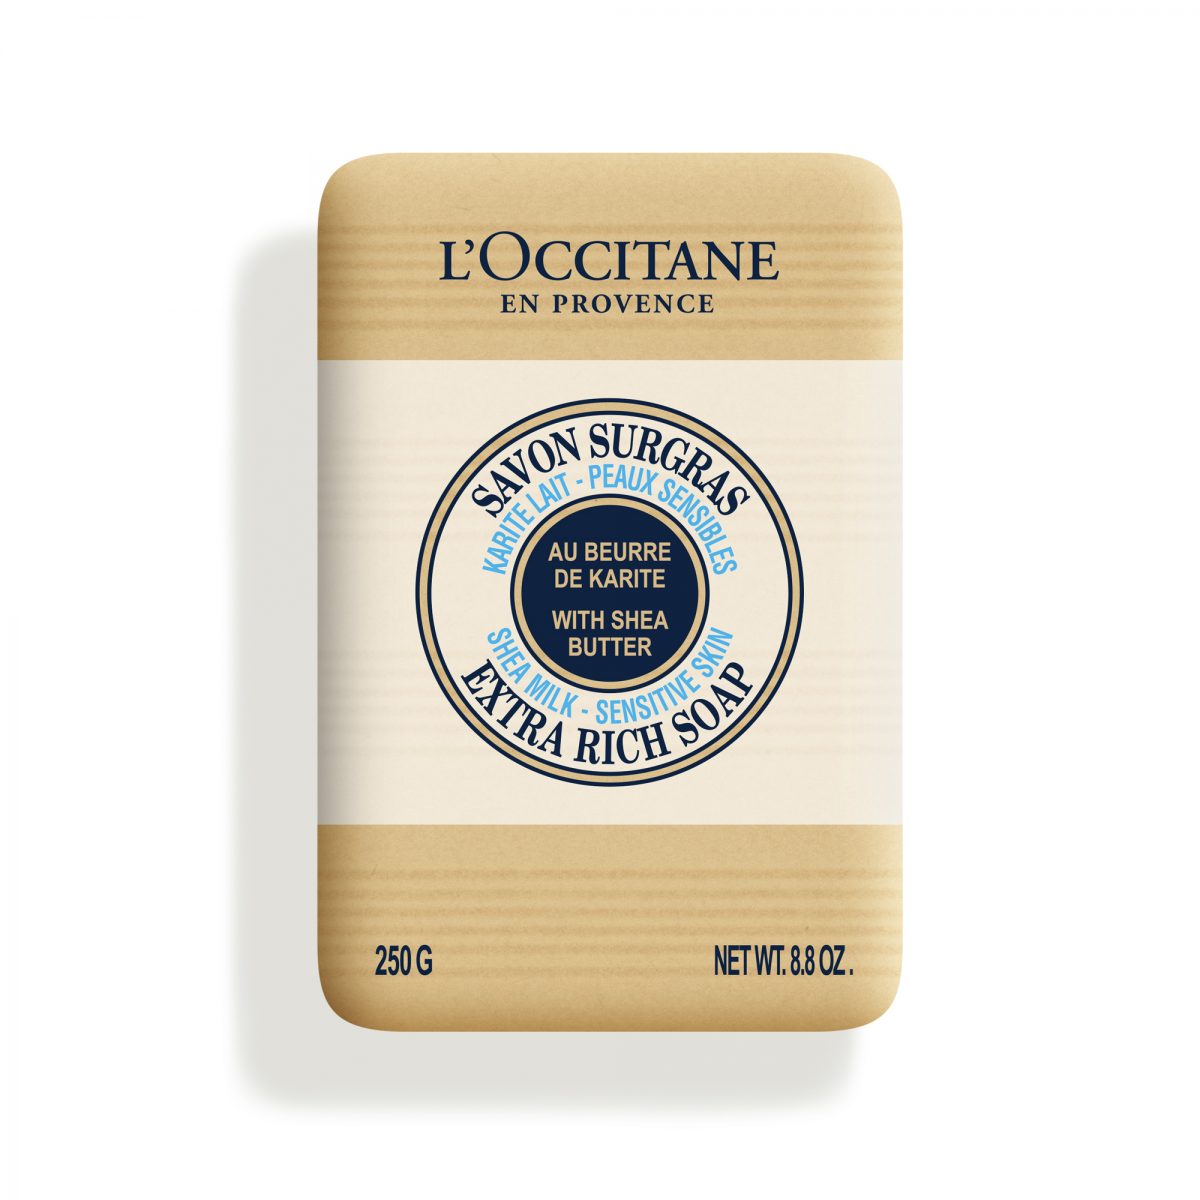 Loccitane Shea Milk Sensitive Skin Extra Rich Soap 250g